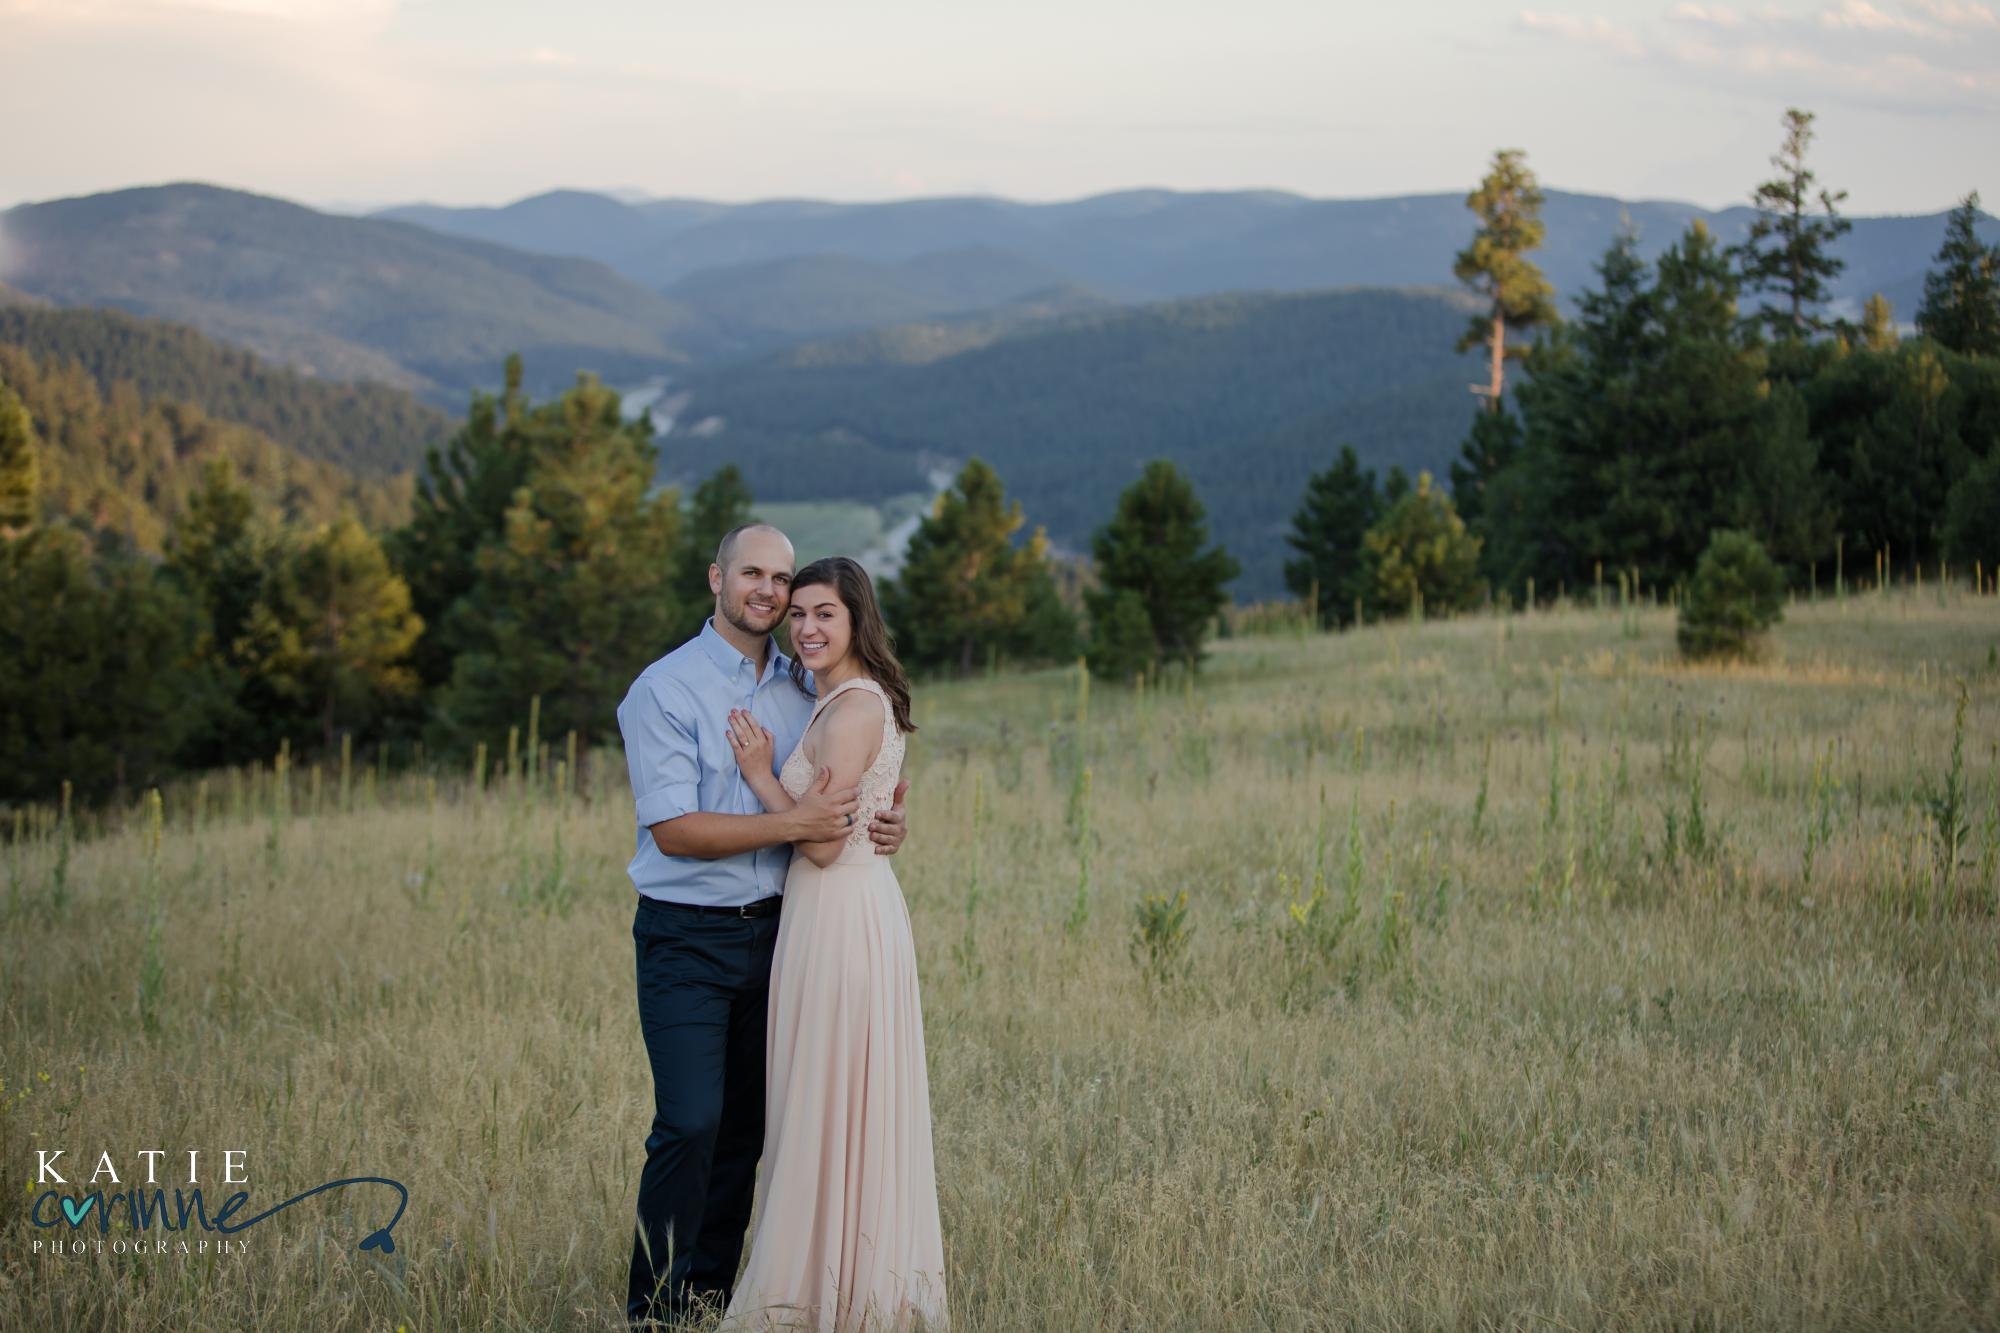 Colorado Springs engaged couple at Mount Falcon